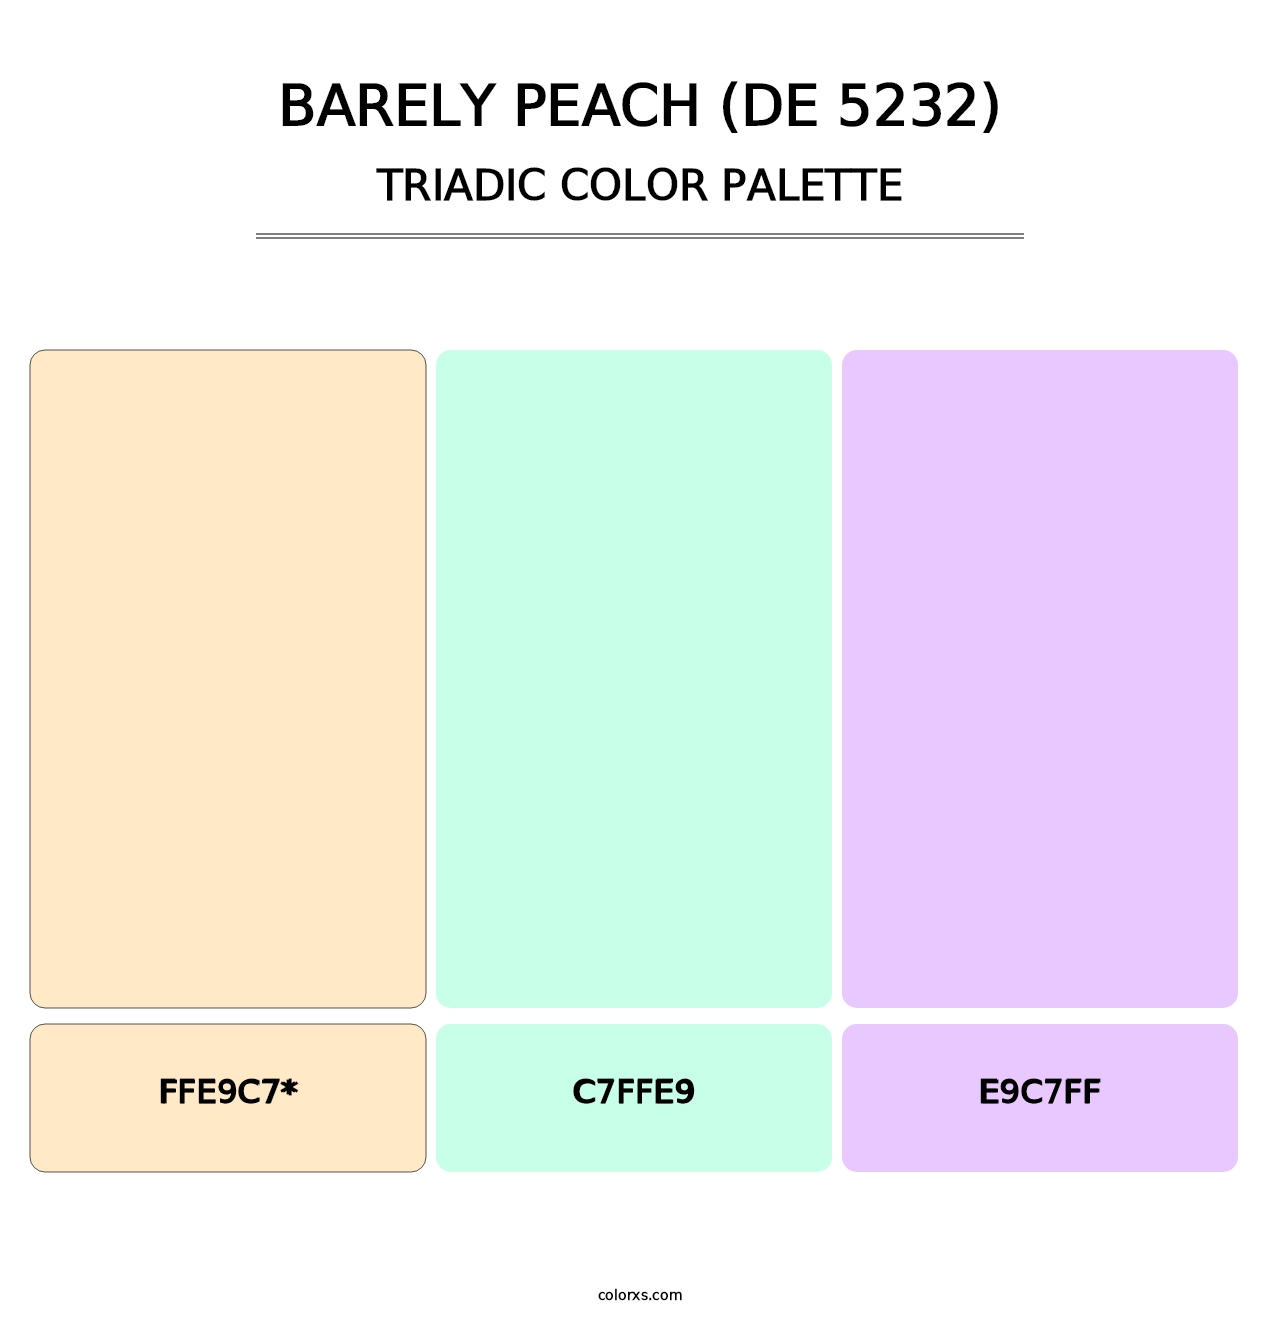 Barely Peach (DE 5232) - Triadic Color Palette